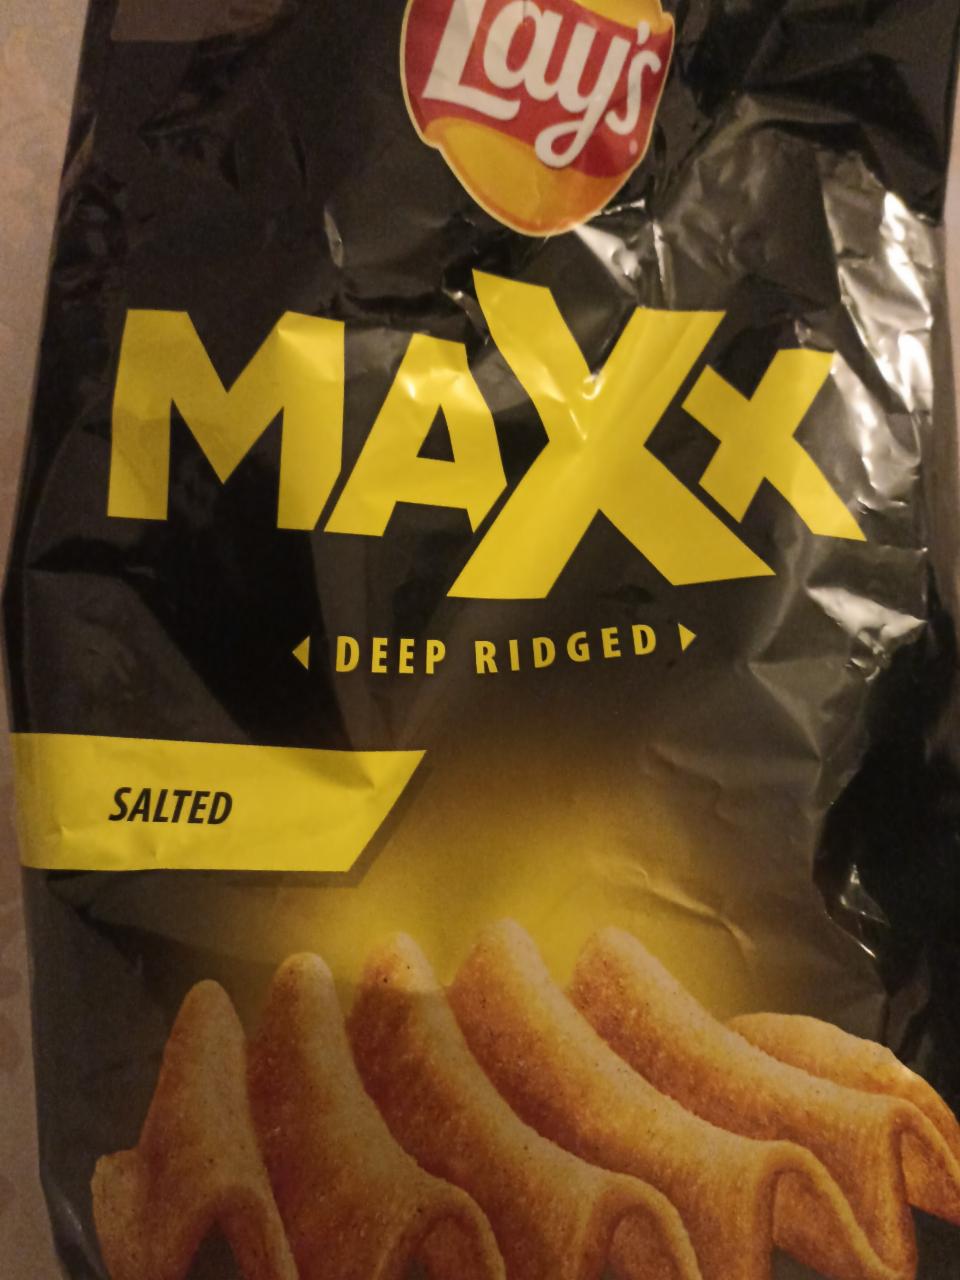 Képek - Maxx Deep Ridged Salted Lay's